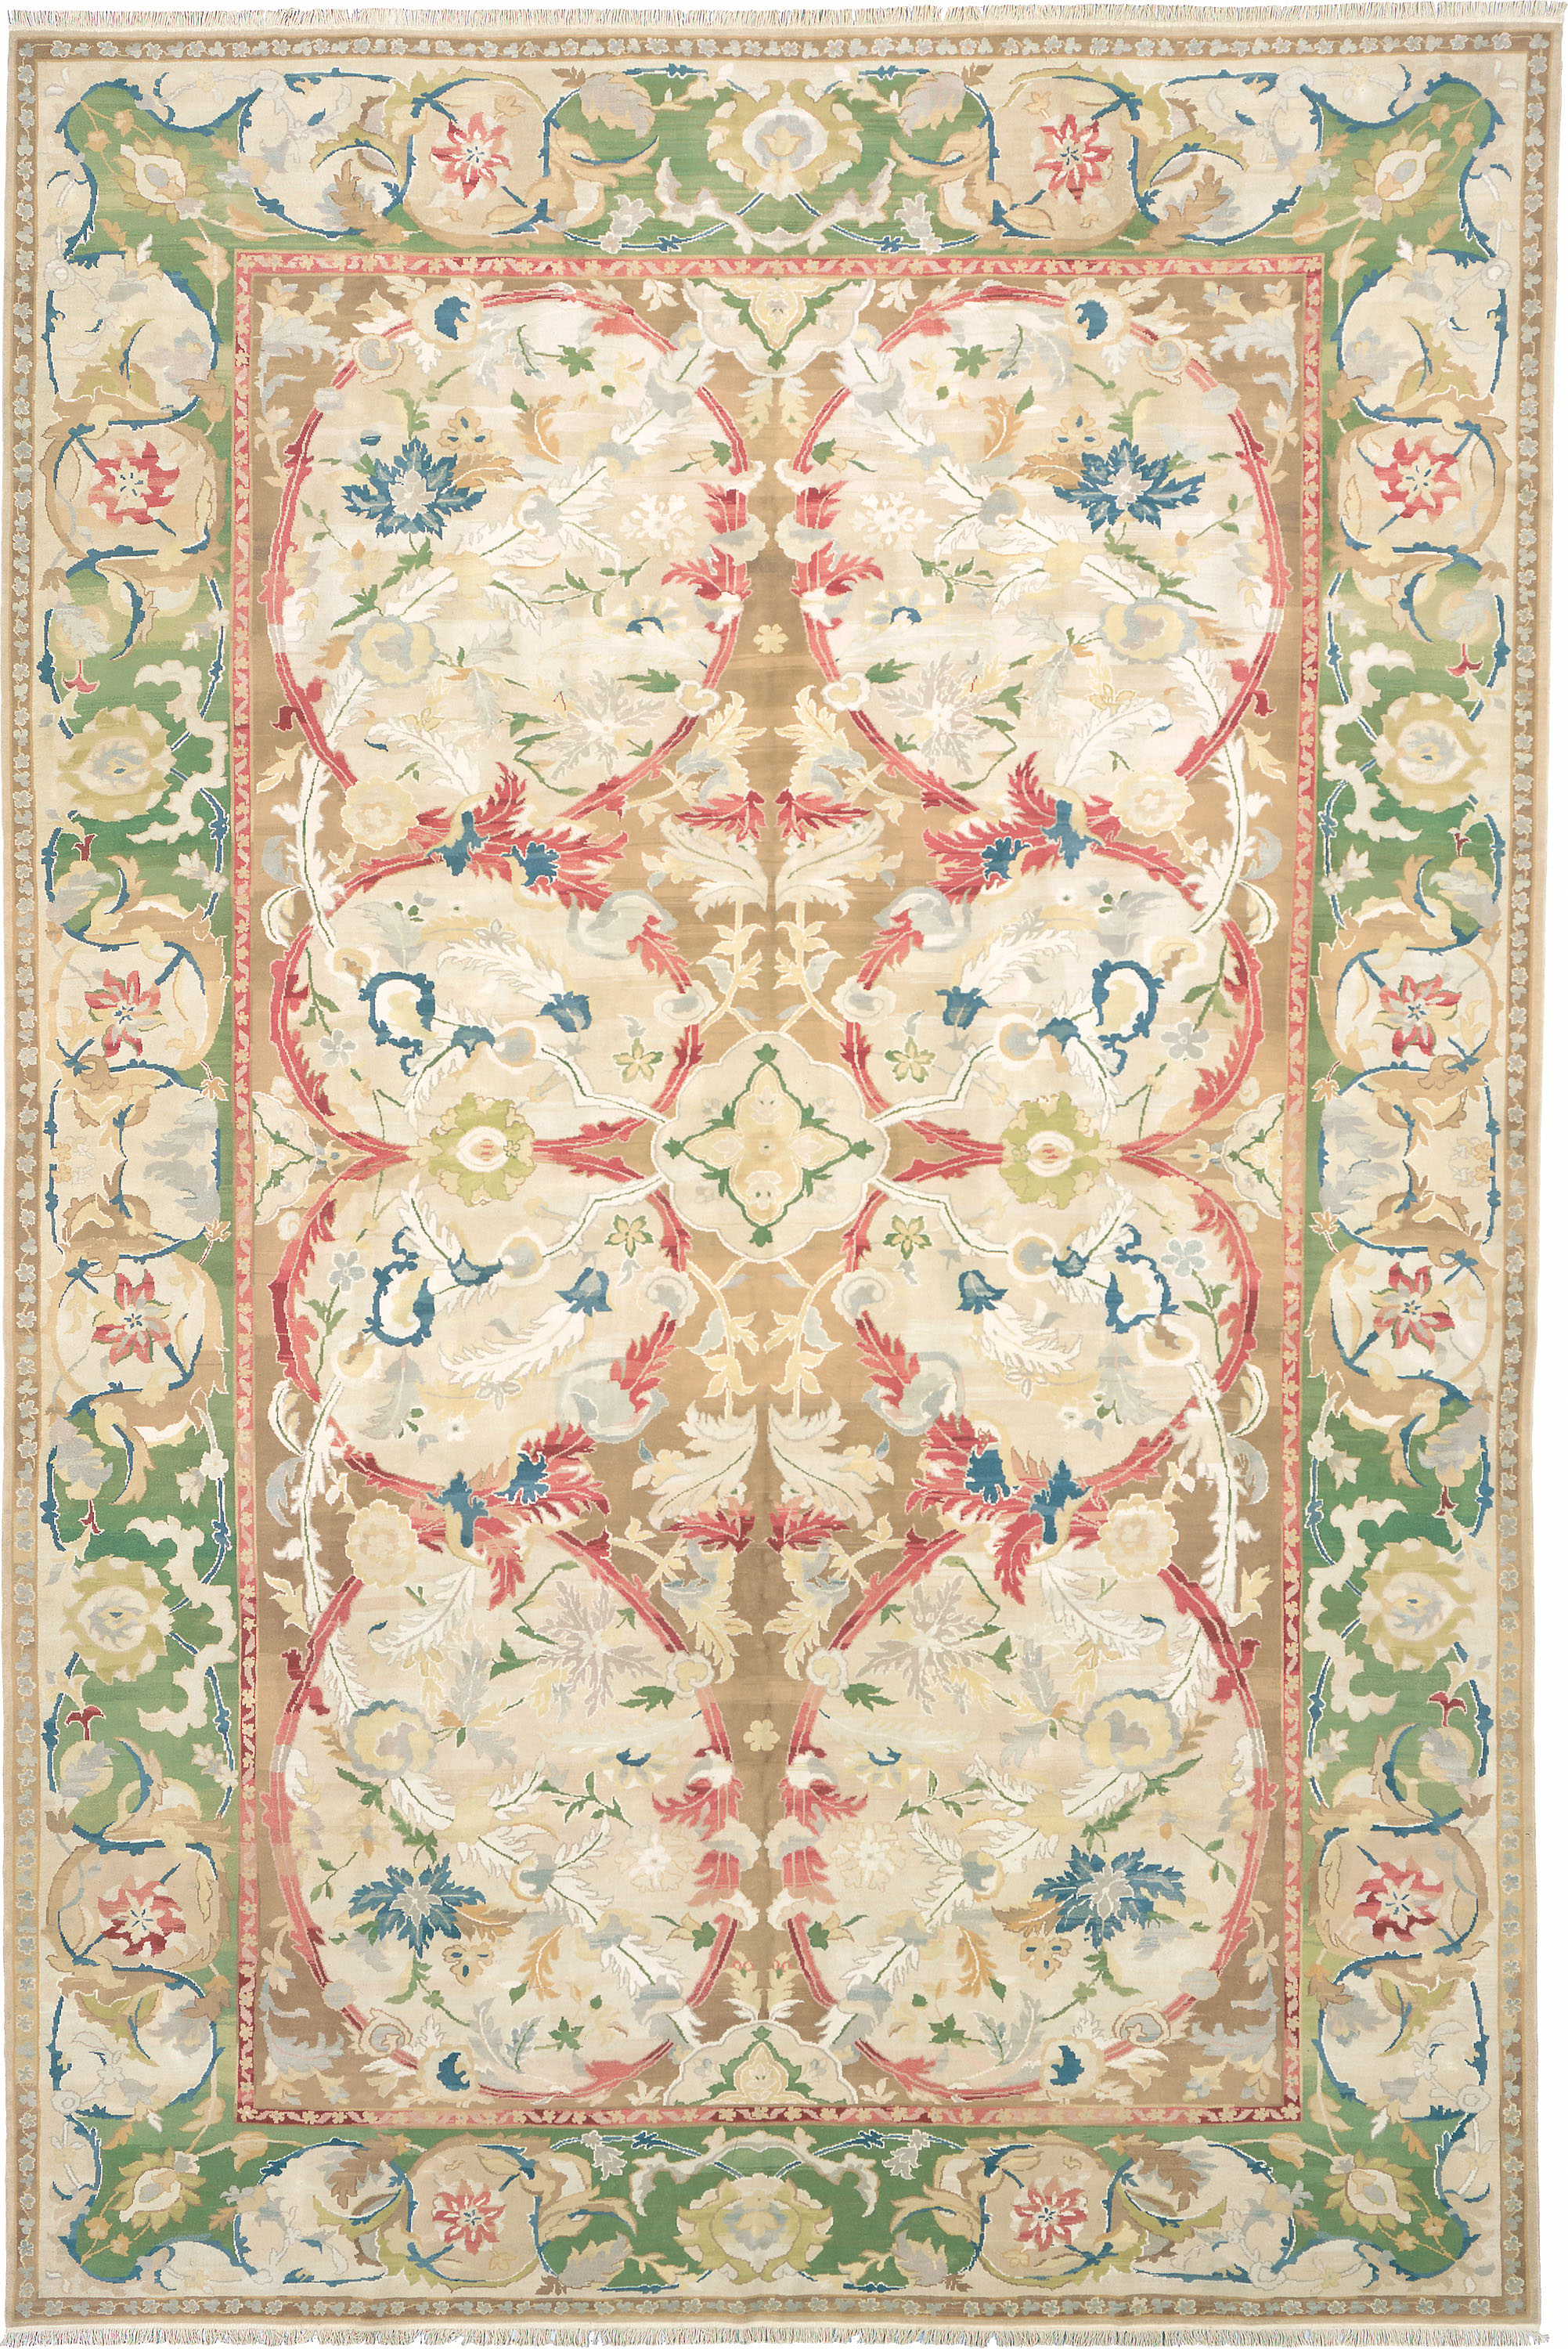 16096 Red Vine | Custom Traditional Design Carpet | FJ Hakimian | Carpet Gallery in NYC